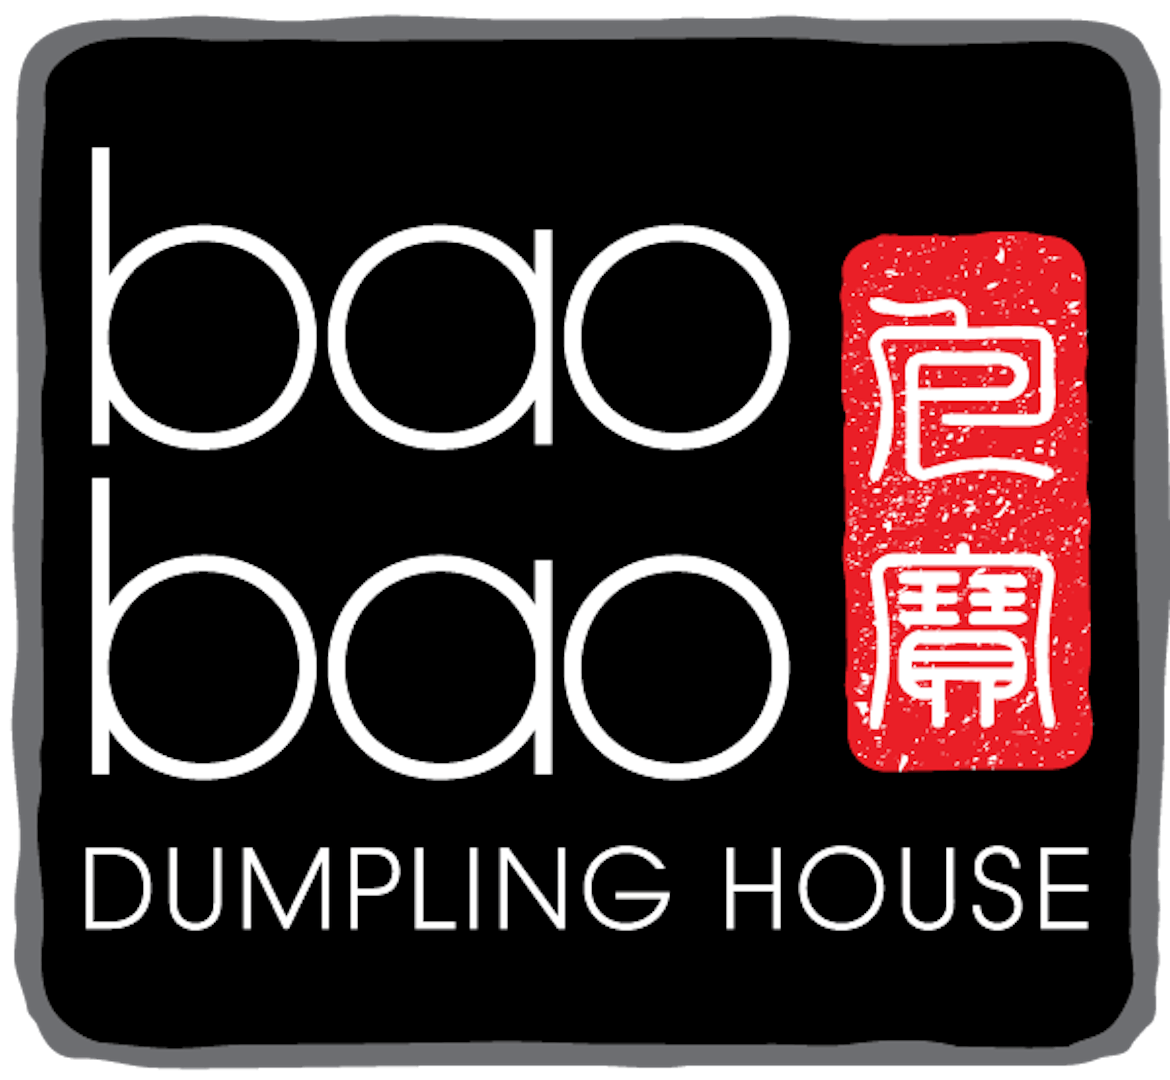 BaoBao Dumpling House